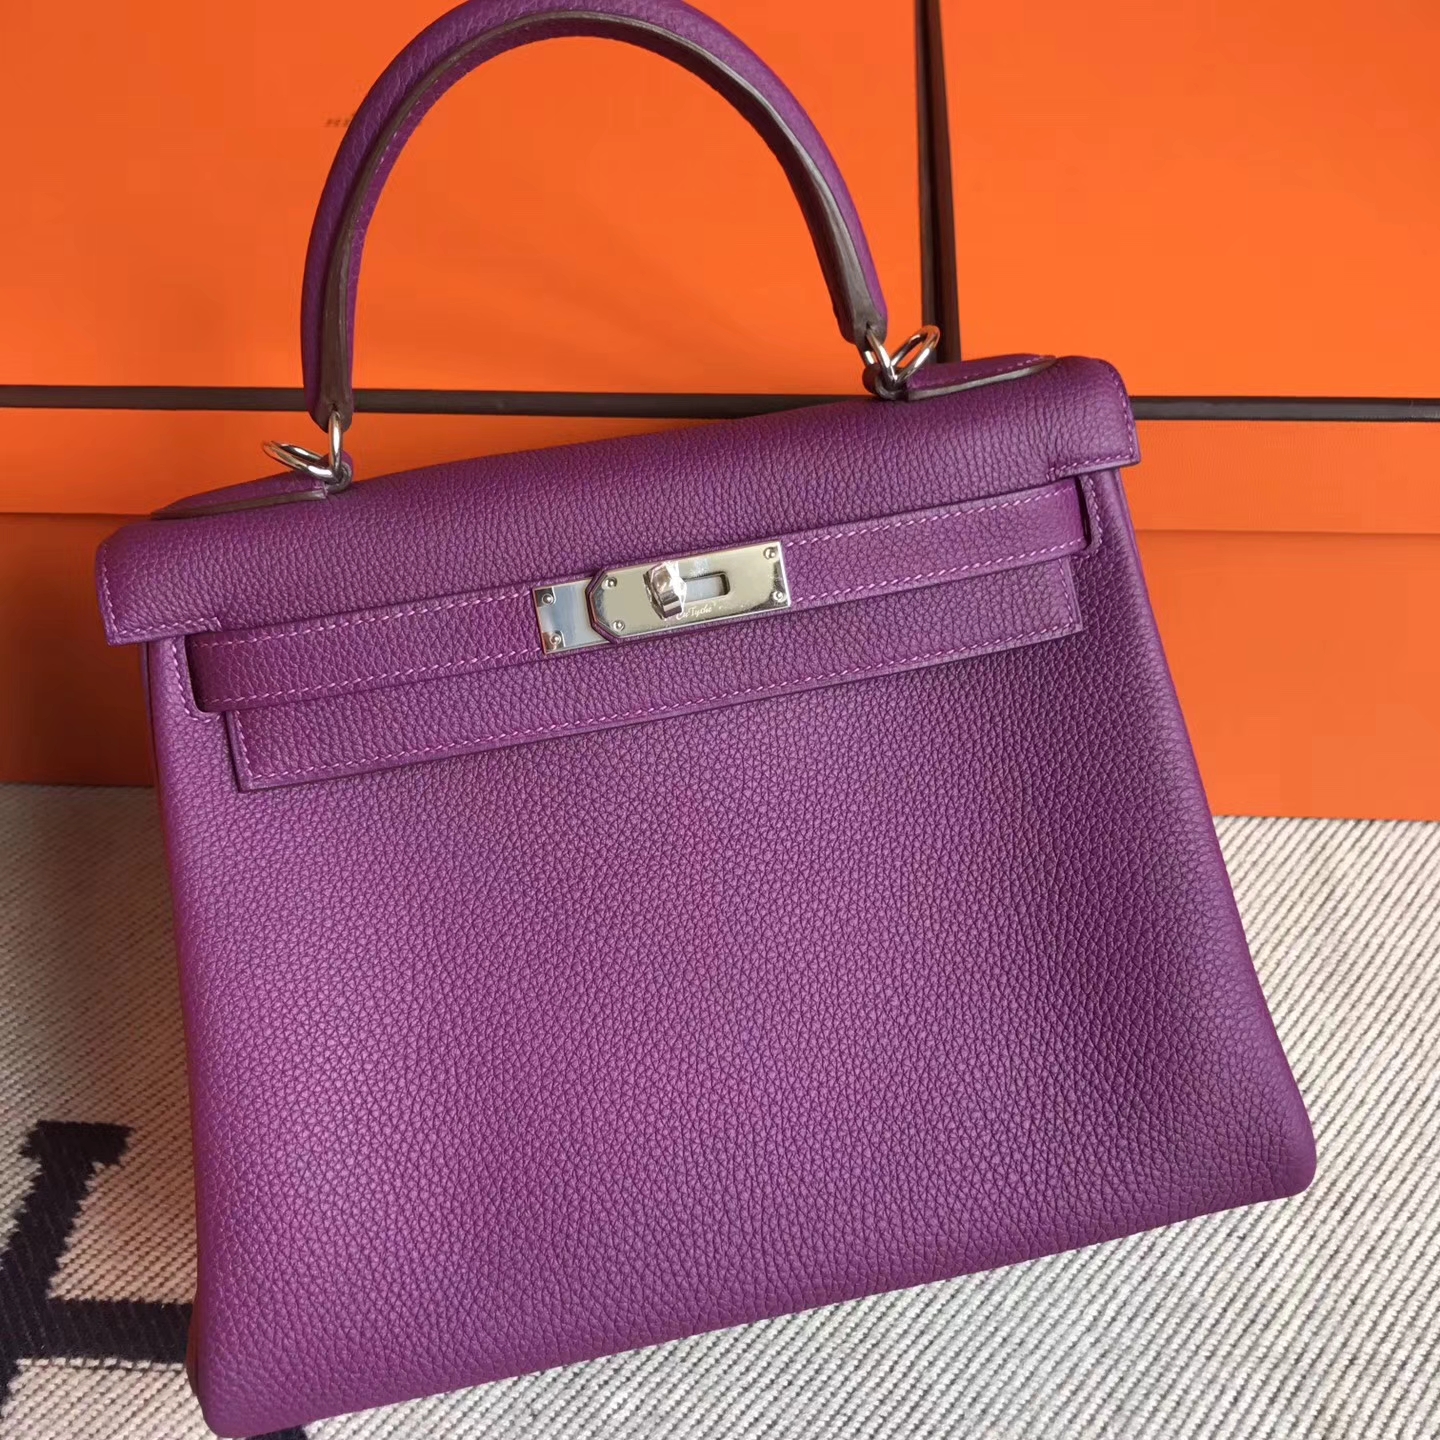 New Arrival Hermes P9 Amenone Purple Togo Leather Kelly28cm Handbag ...